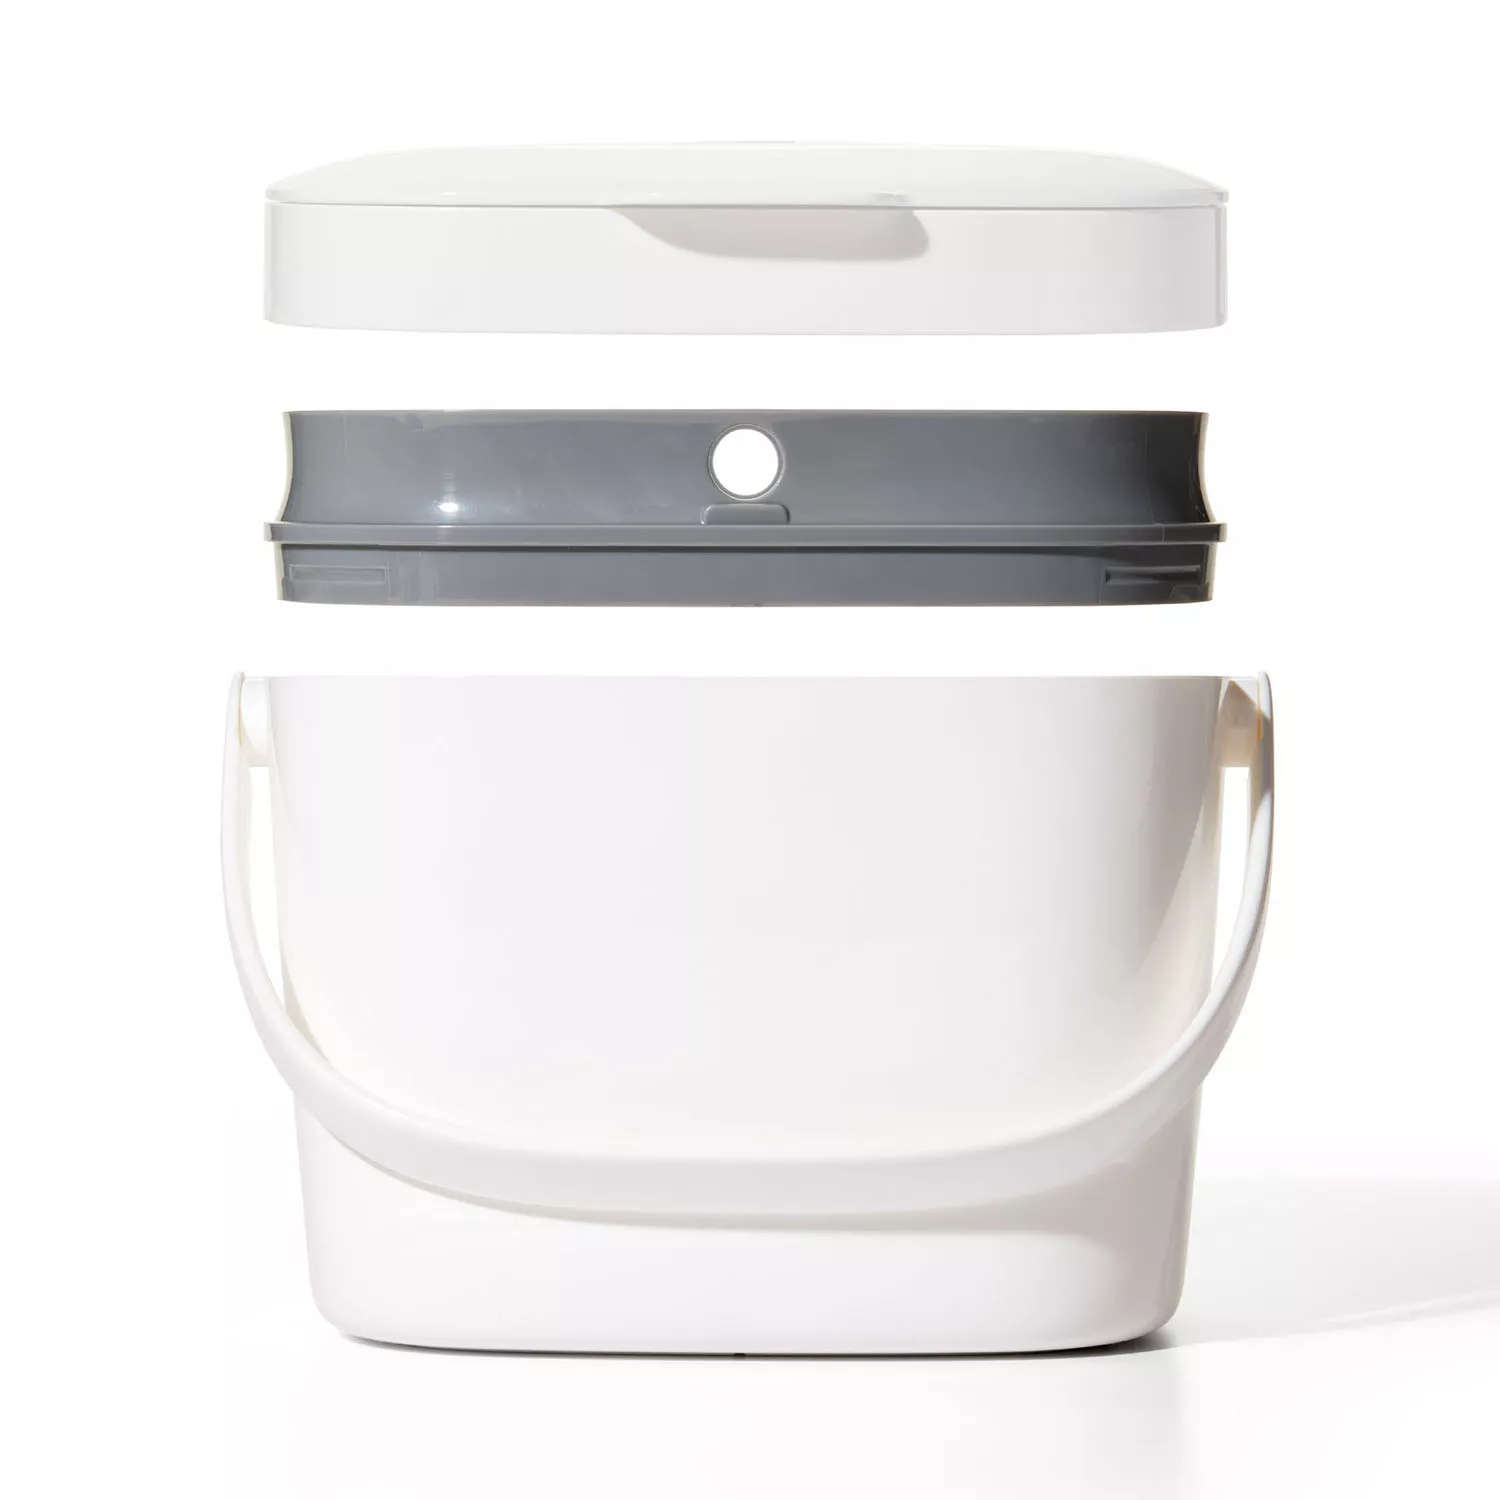 OXO Good Grips Easy-Clean Countertop Compost Bin + Reviews